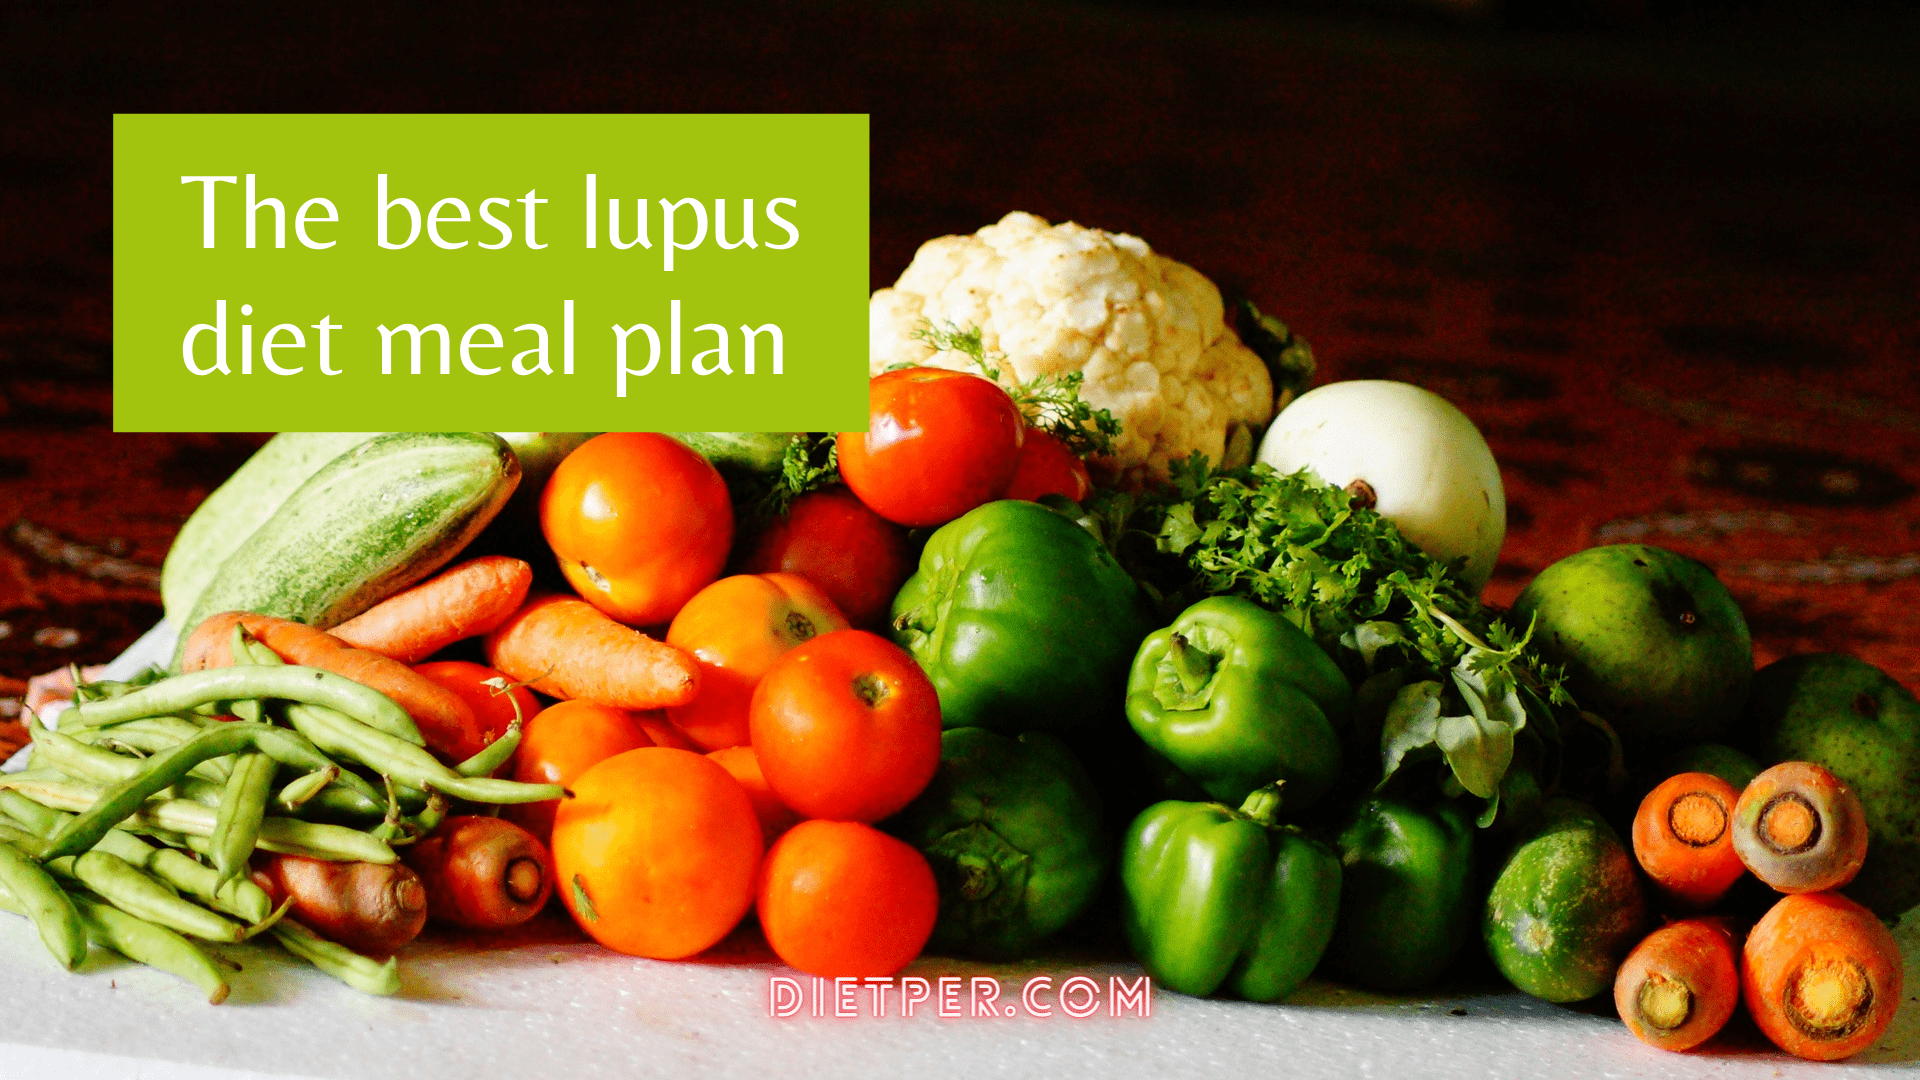 lupus diet meal plan